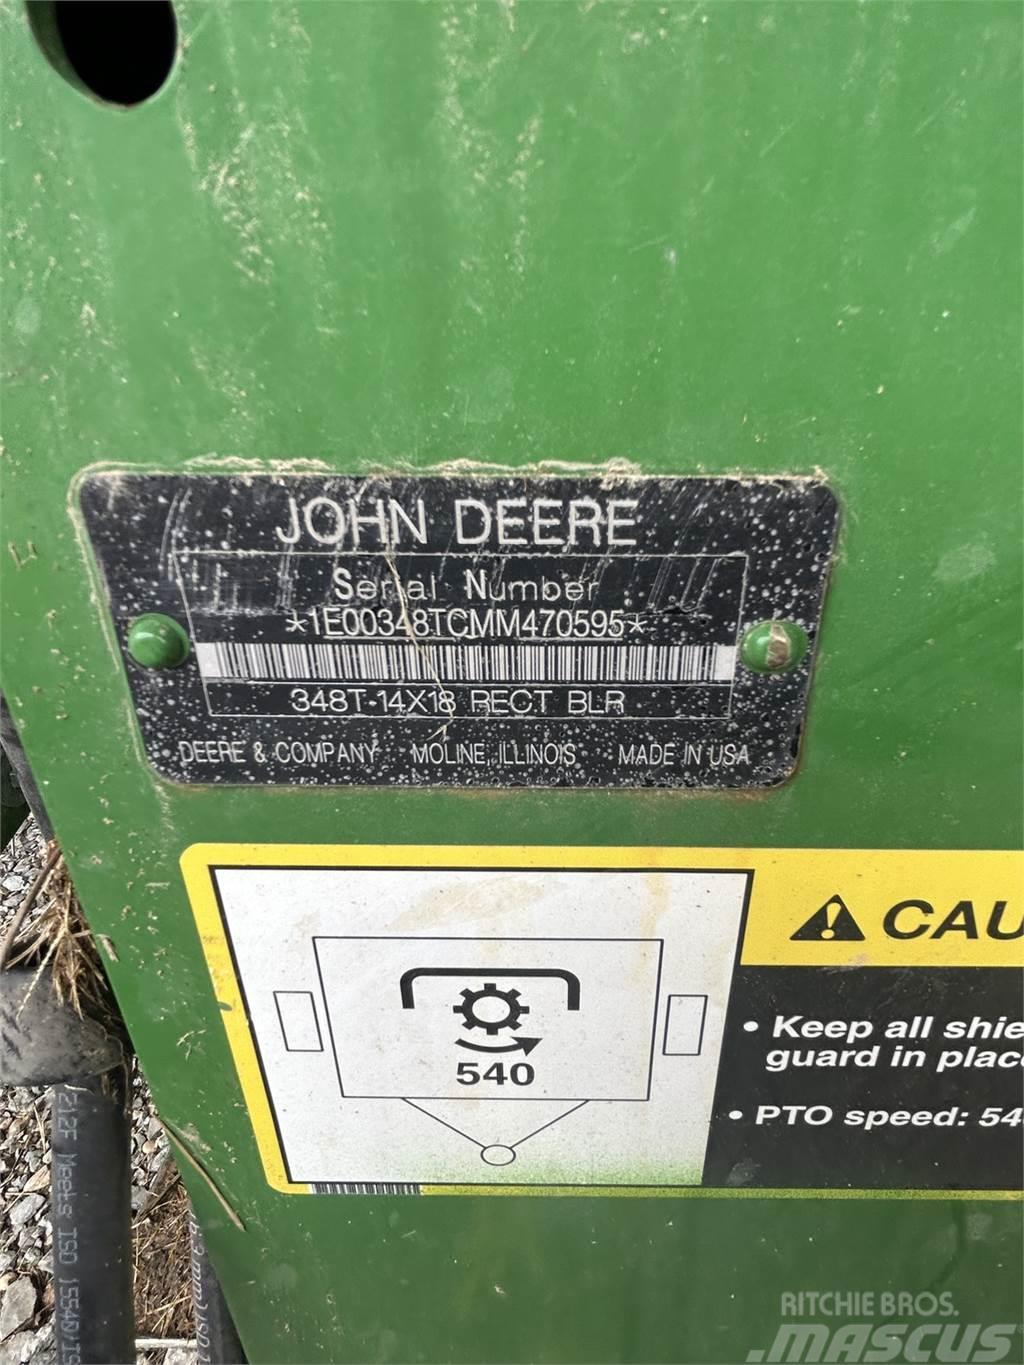 John Deere 348 Lis na hranaté balíky